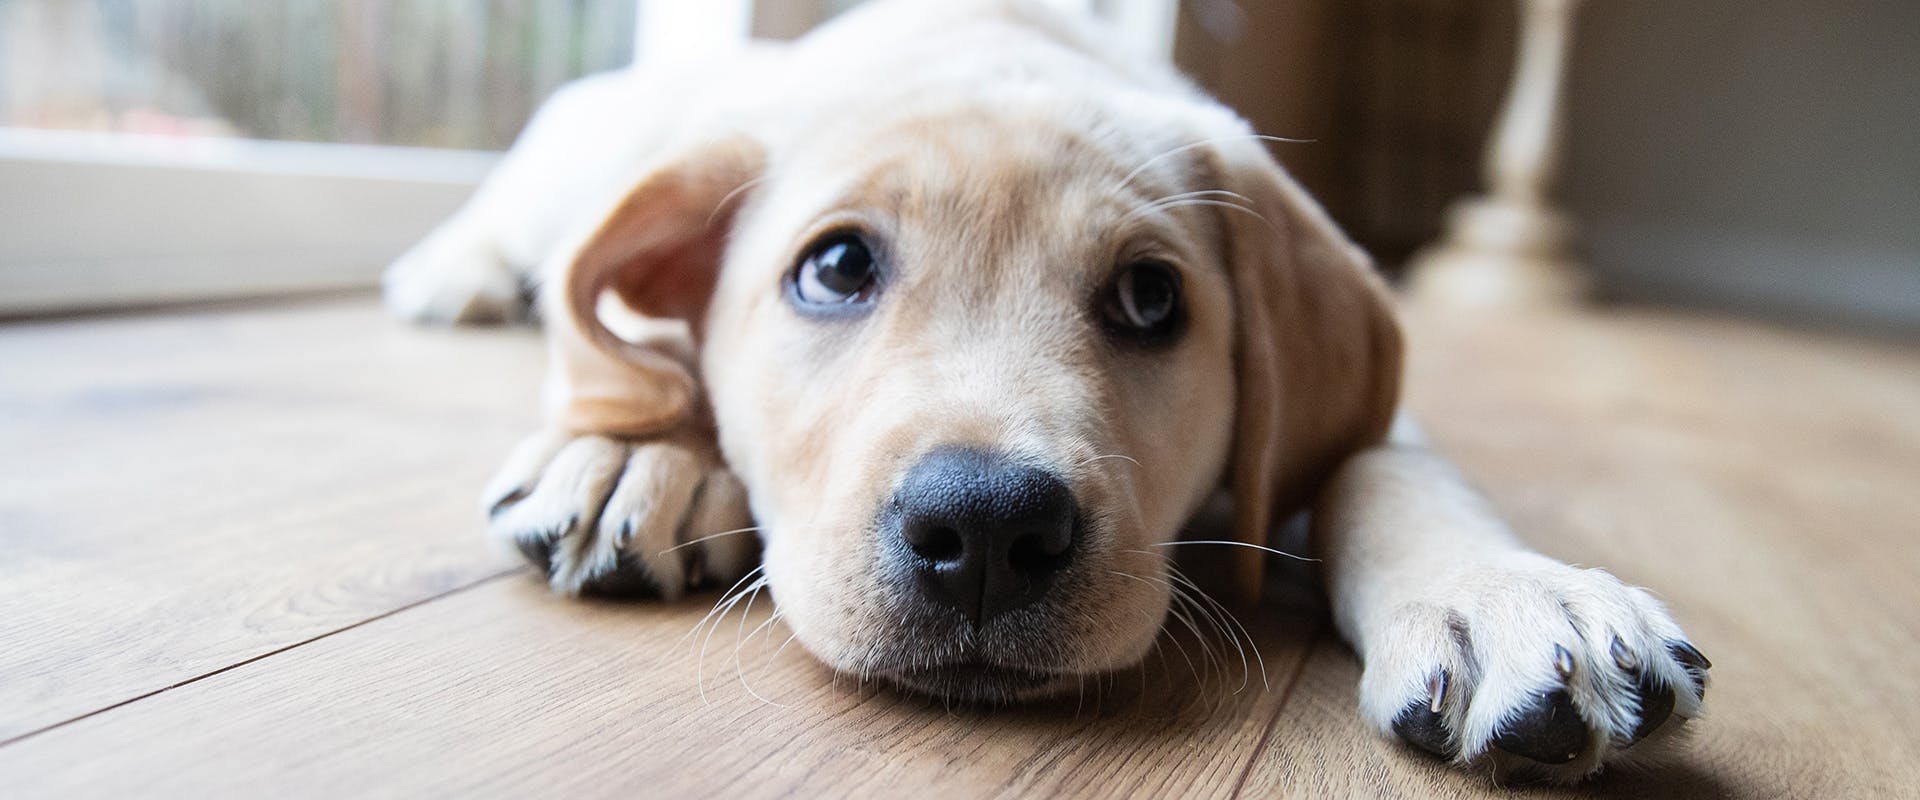 A Labrador puppy looking upwards, sitting on a hardwood floor